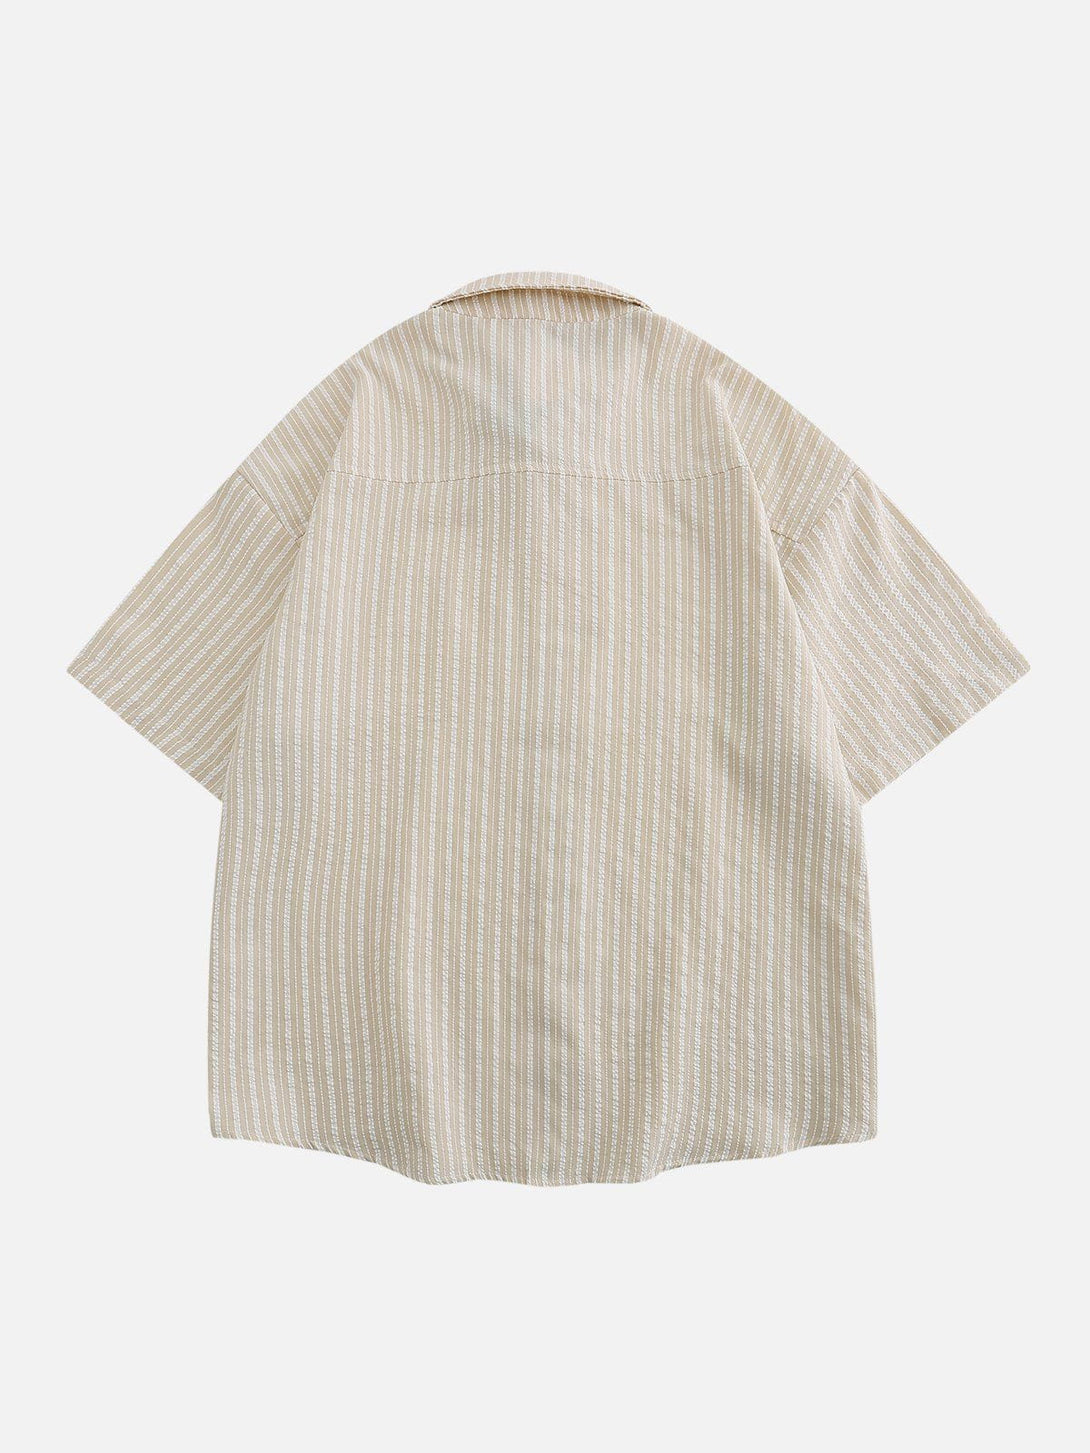 Majesda® - Small Flower Pendant Stripes Short Sleeve Shirt outfit ideas streetwear fashion